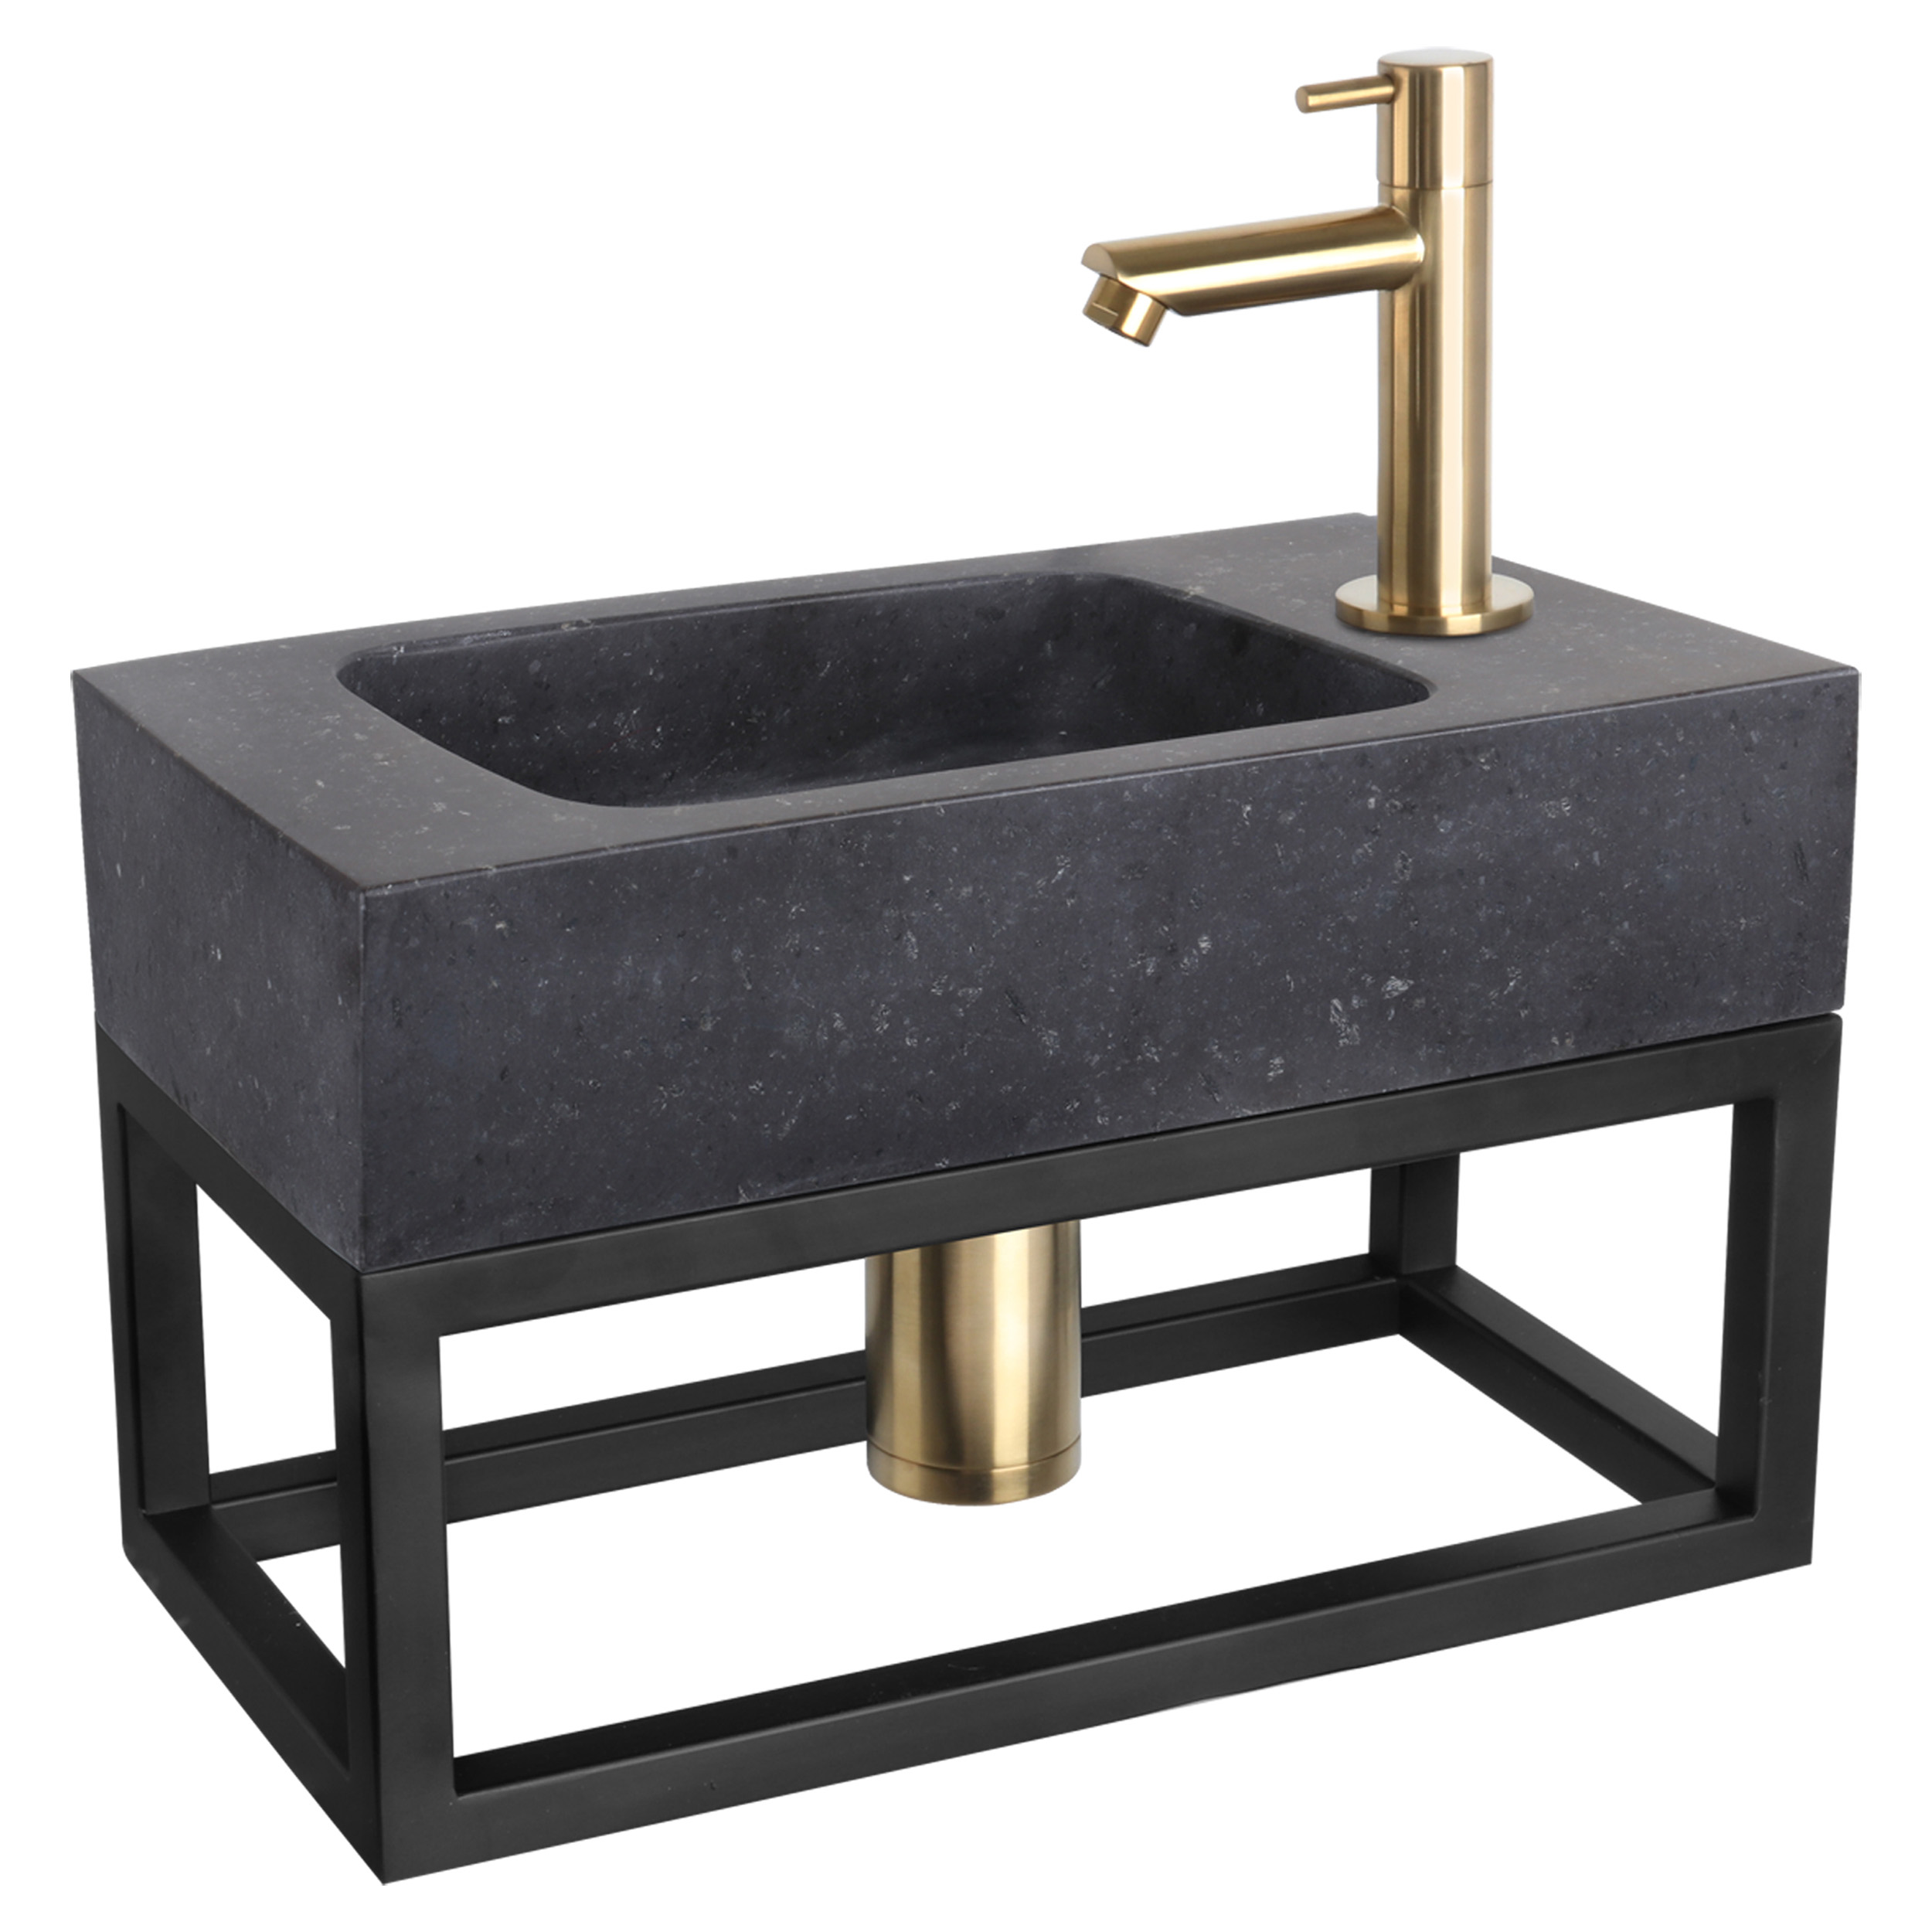 38.401.55 Differnz  fonteinset bombai black - natuursteen - kraan recht - met handdoekrek - 40 x 22 x 9 cm - mat goud